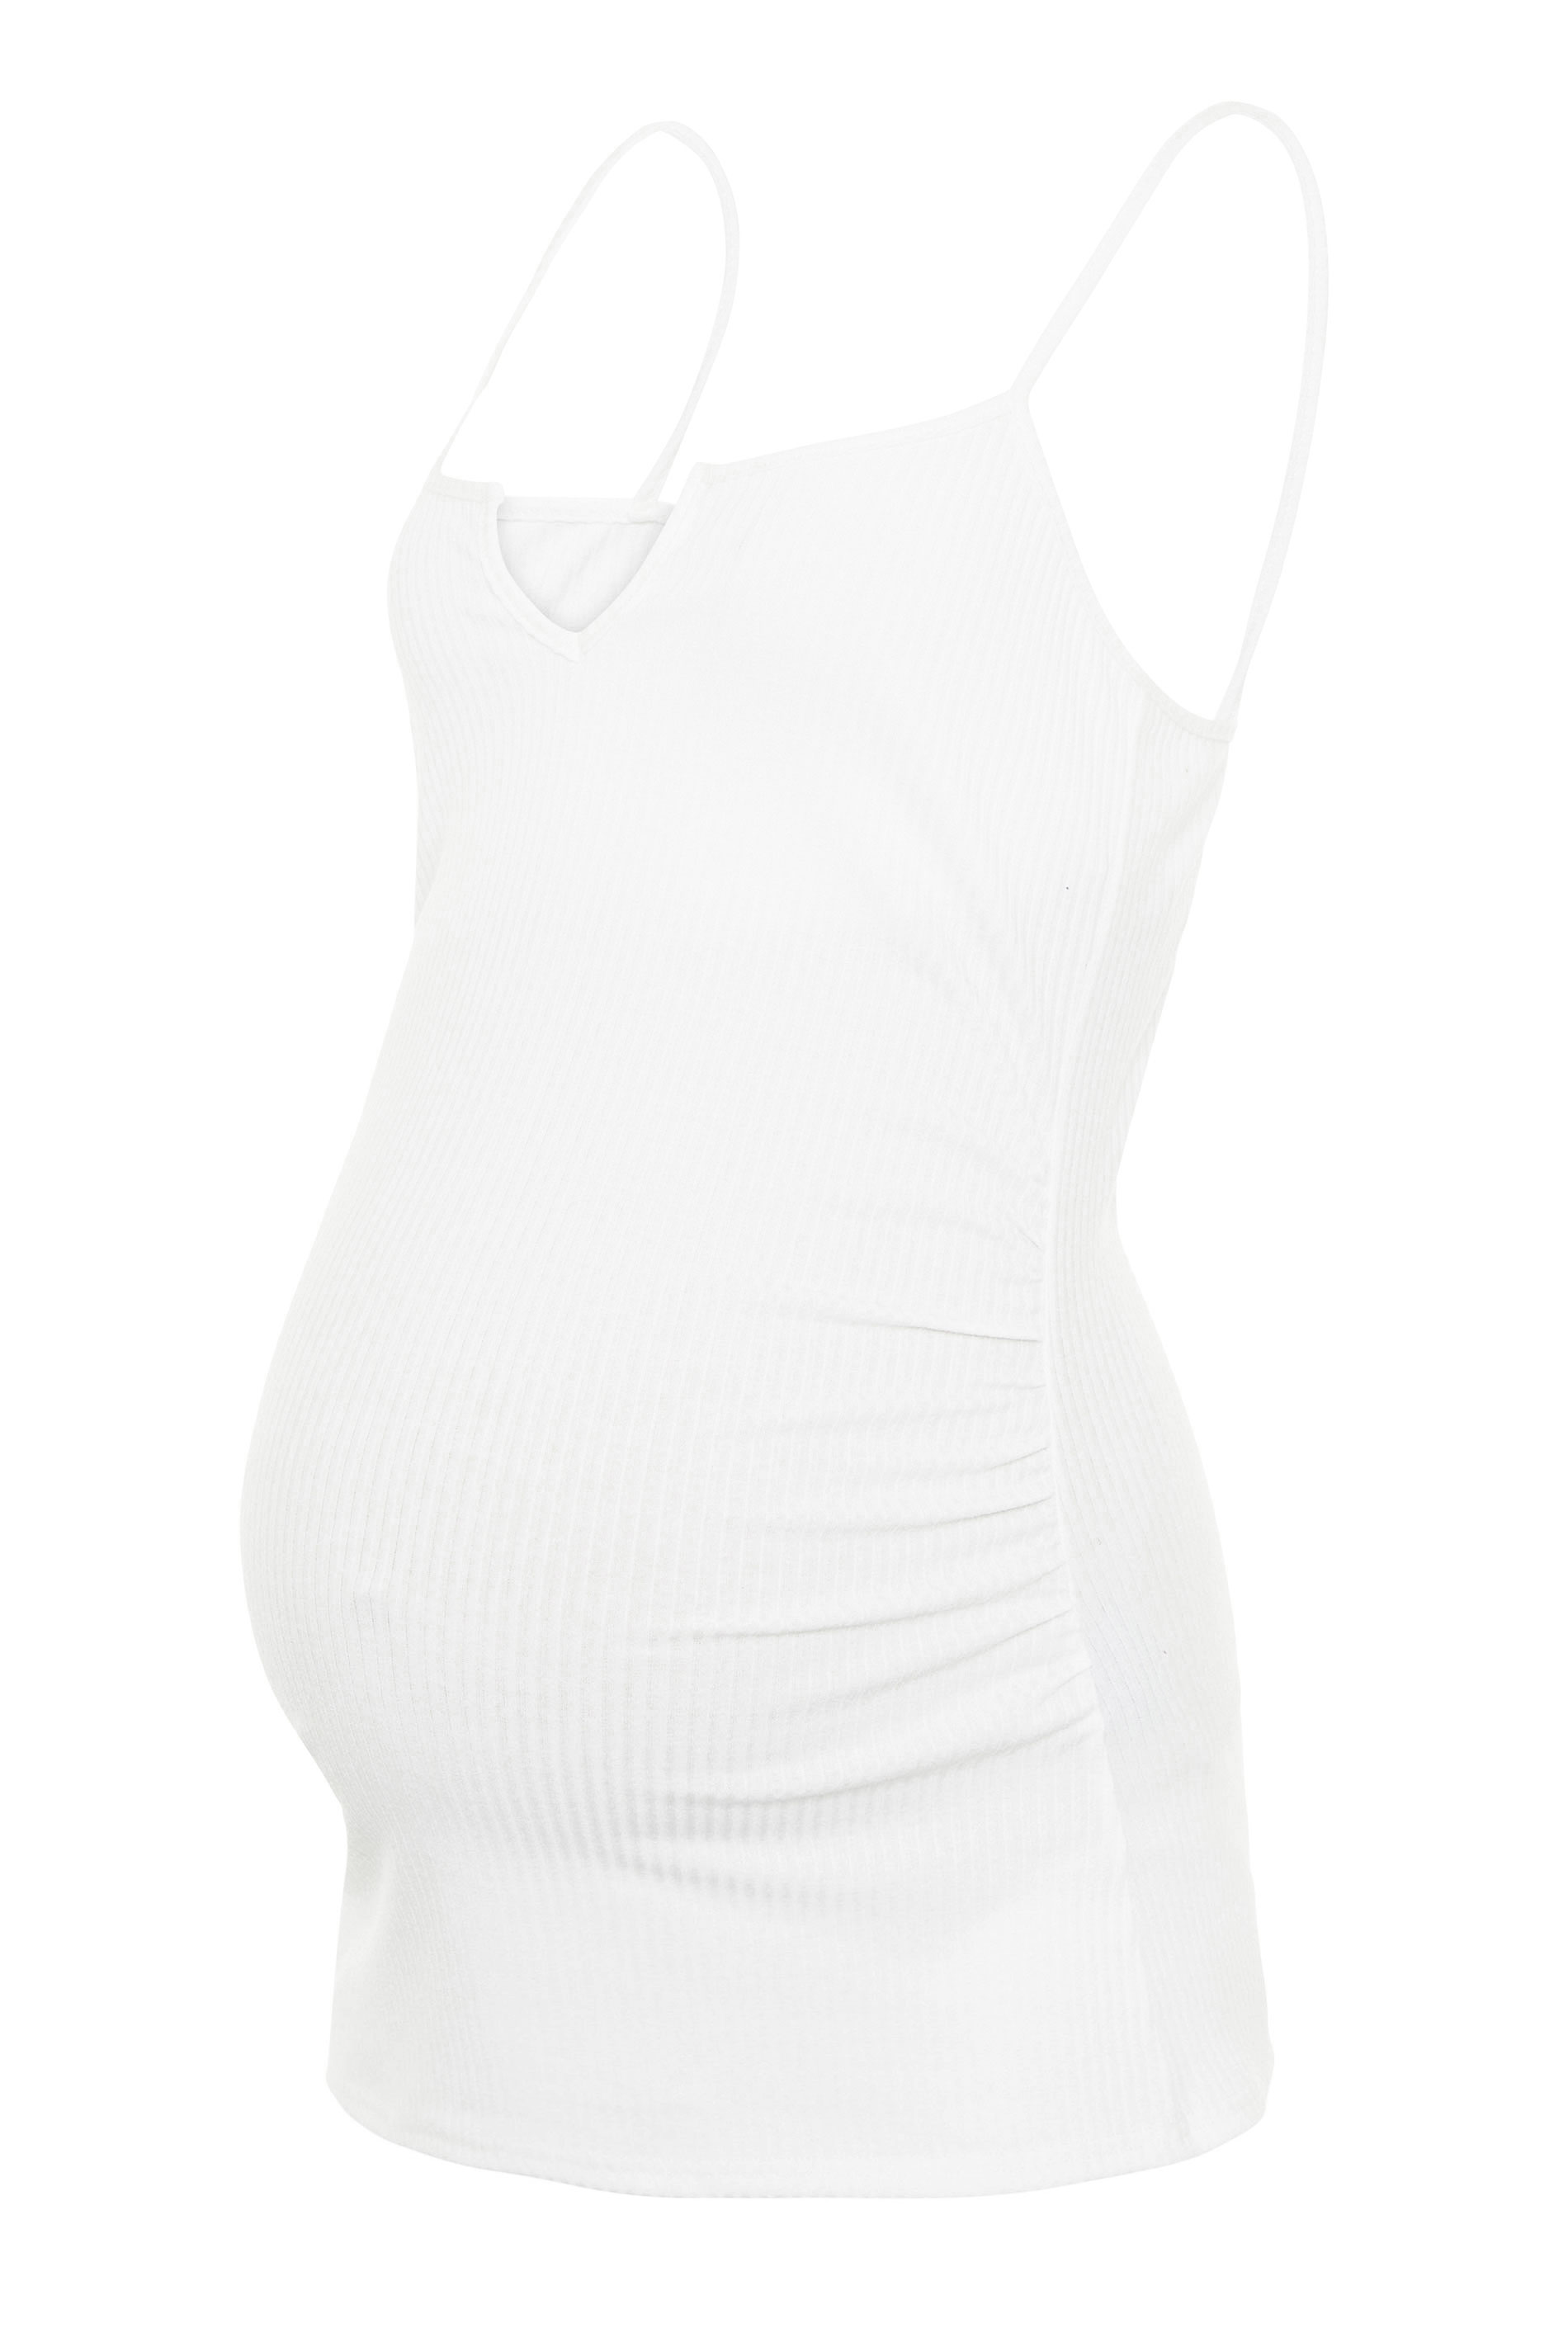 LTS Maternity White Ribbed Cami Top | Long Tall Sally 1